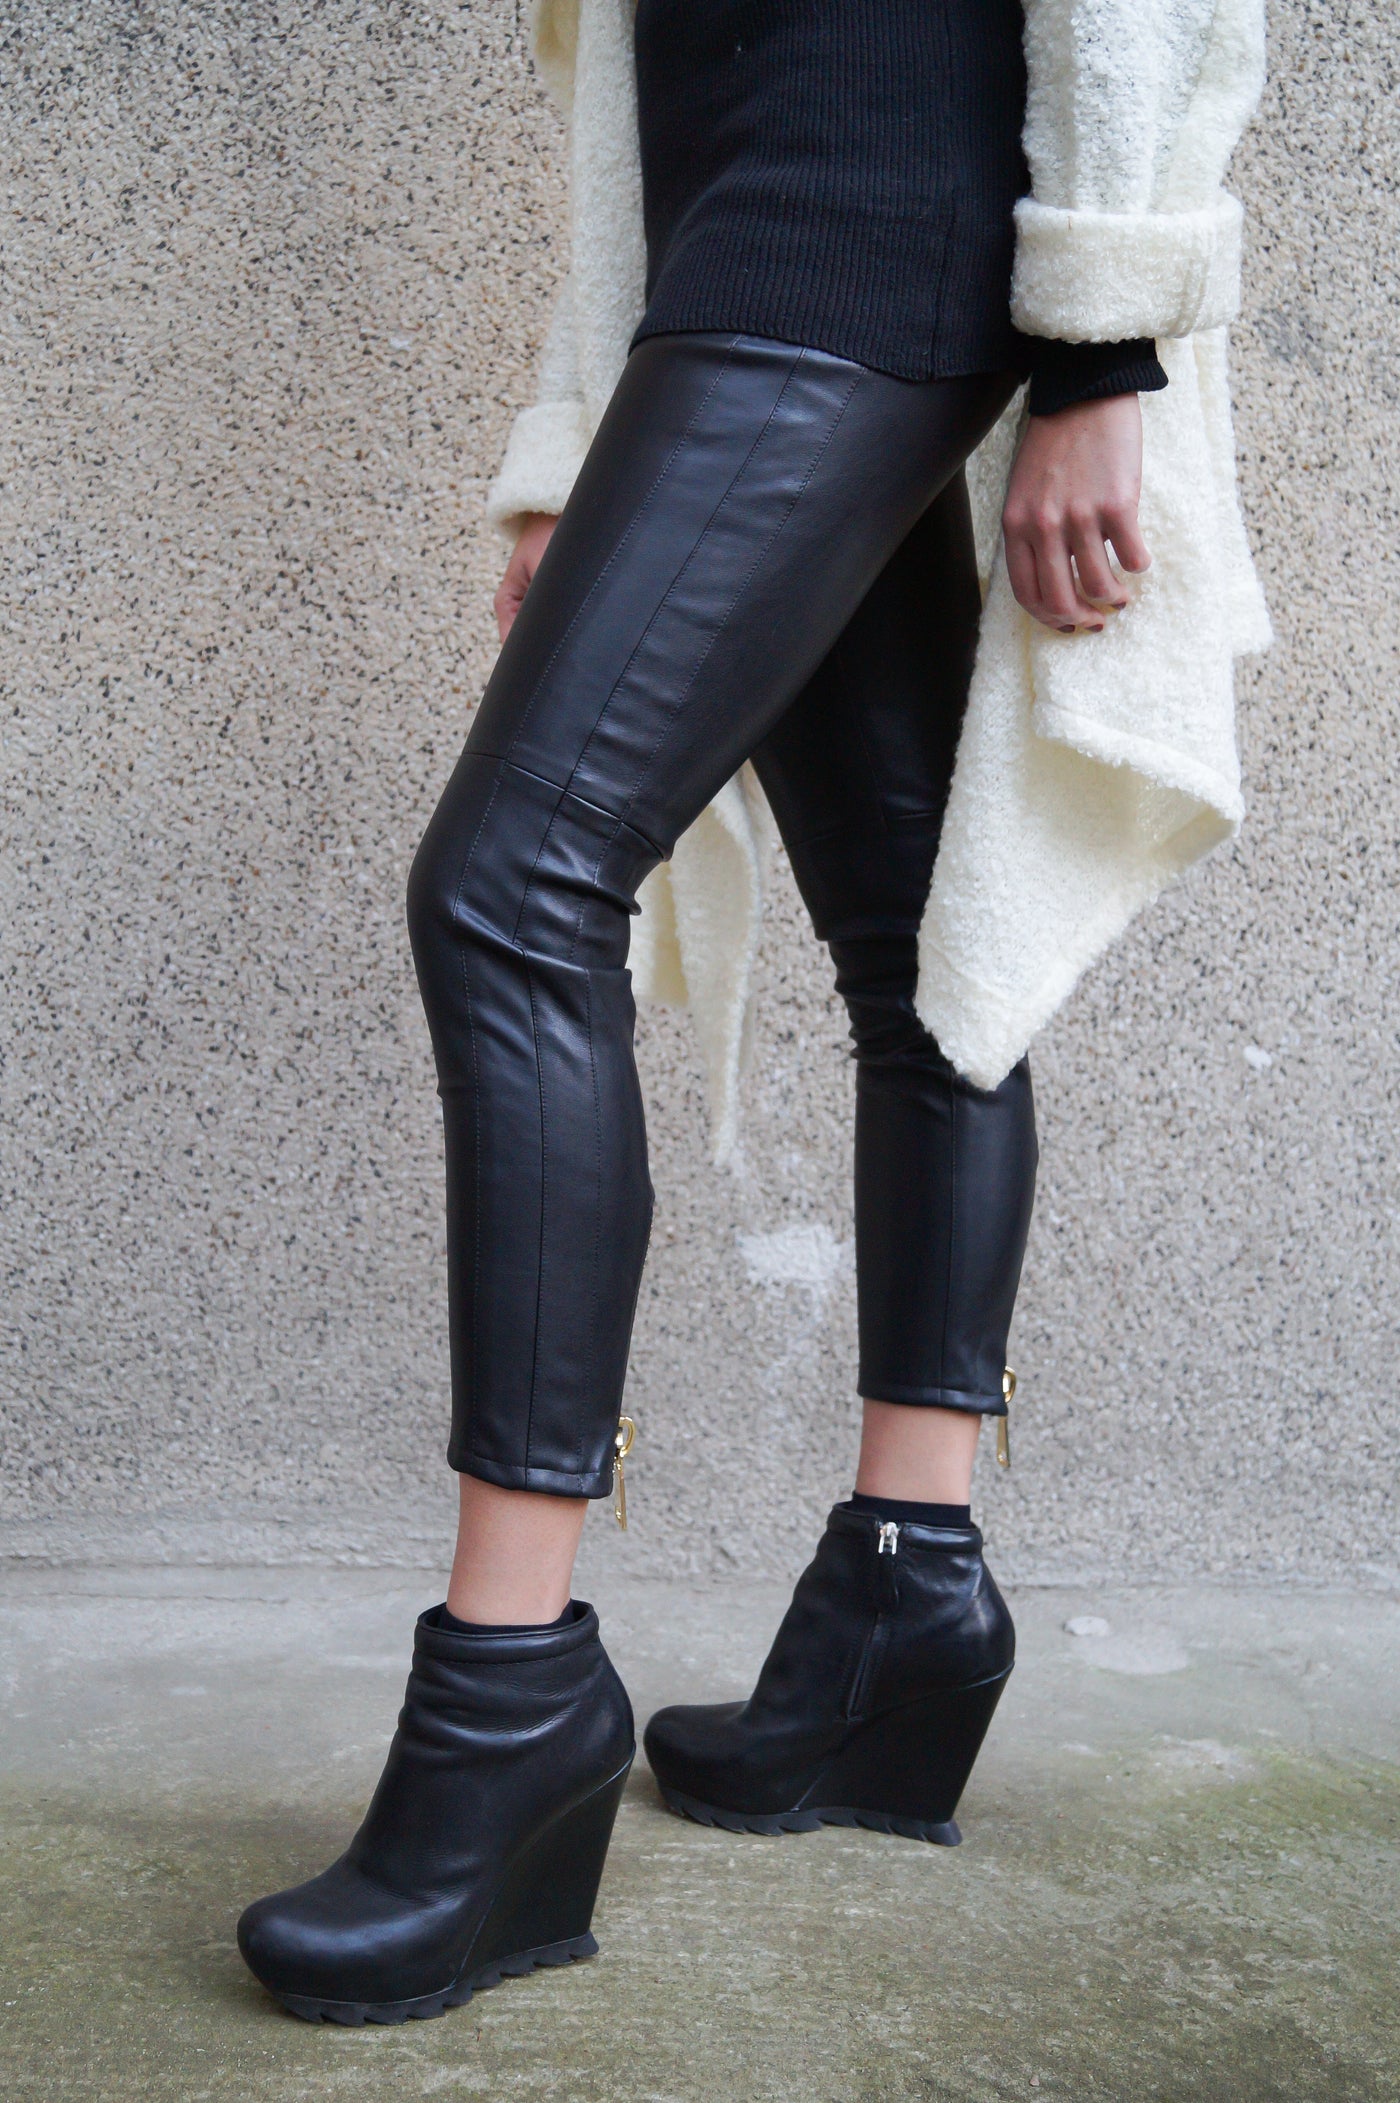 Black vegan leather pants with zipper F1104